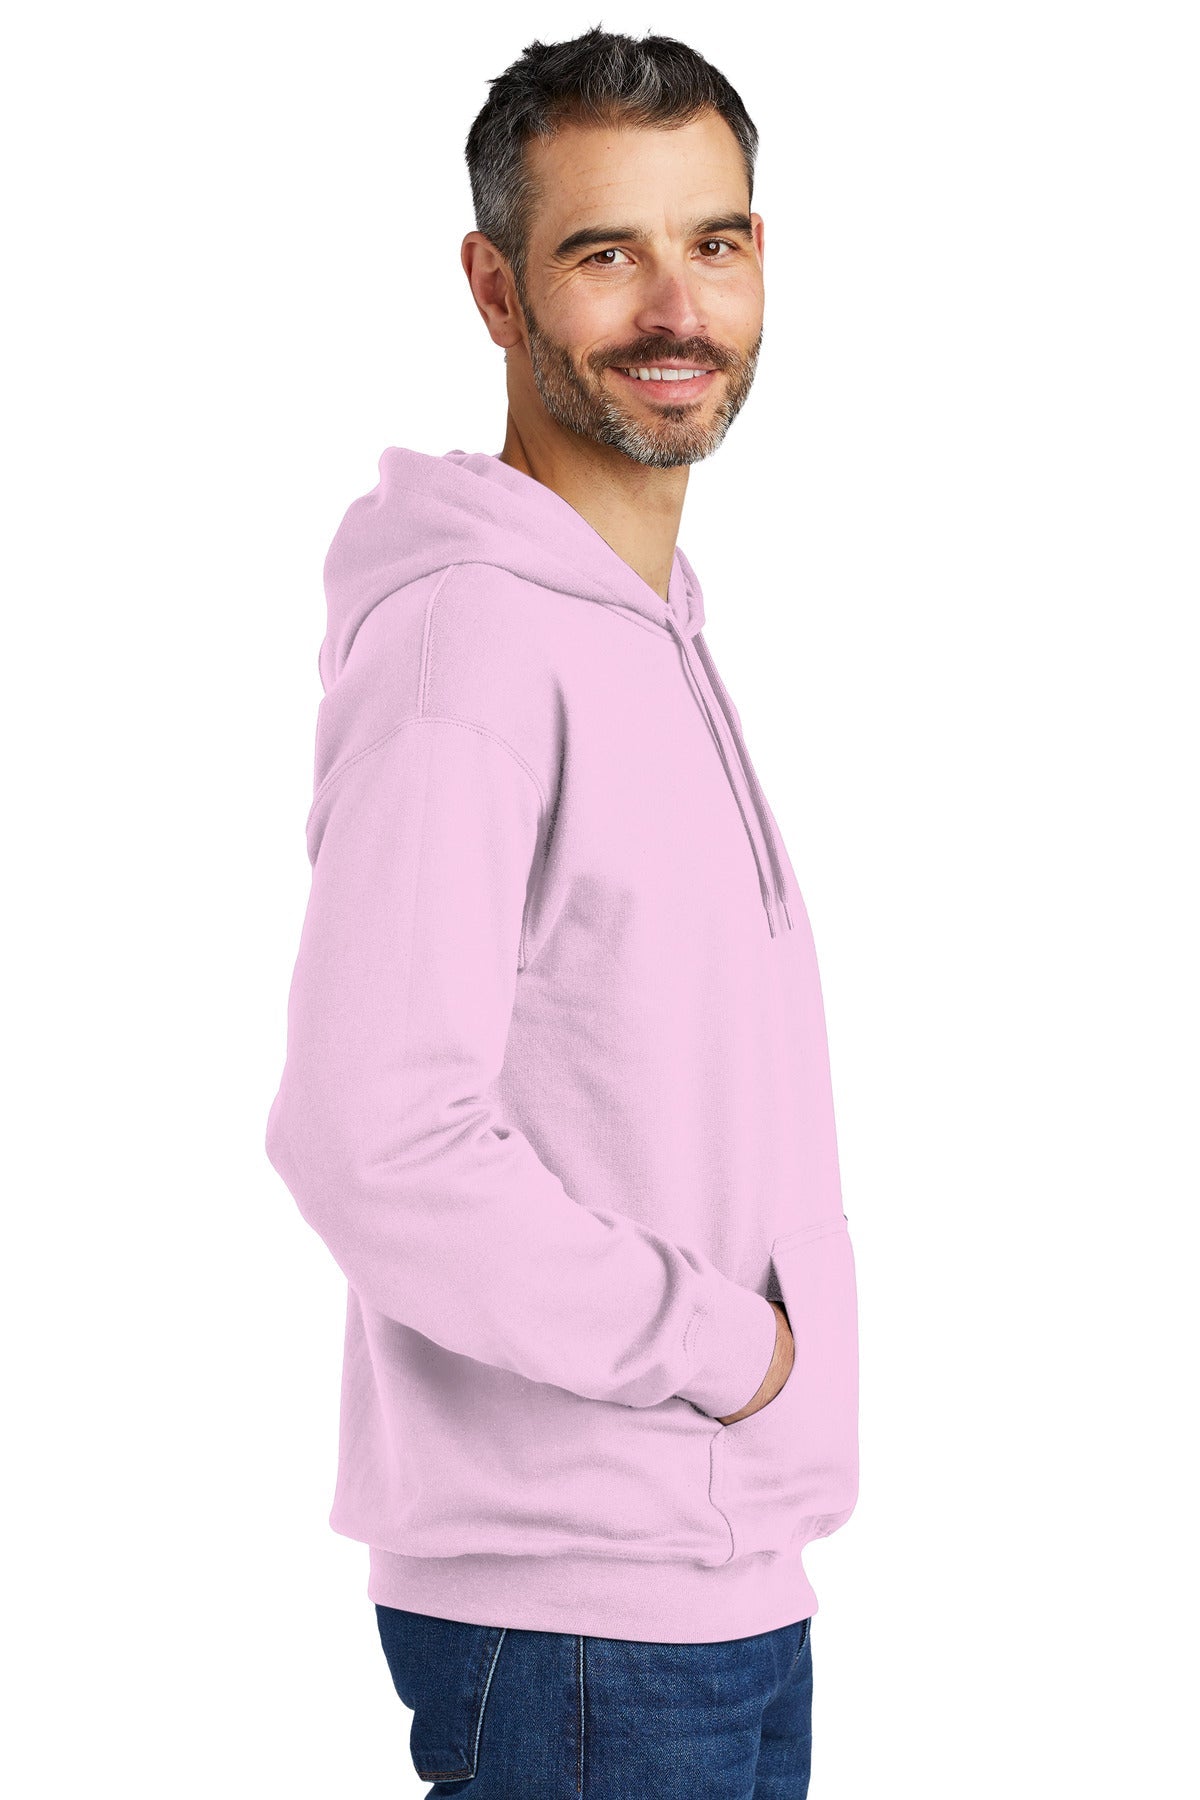 Gildan Softstyle Pullover Hooded Sweatshirt SF500 - BT Imprintables Shirts